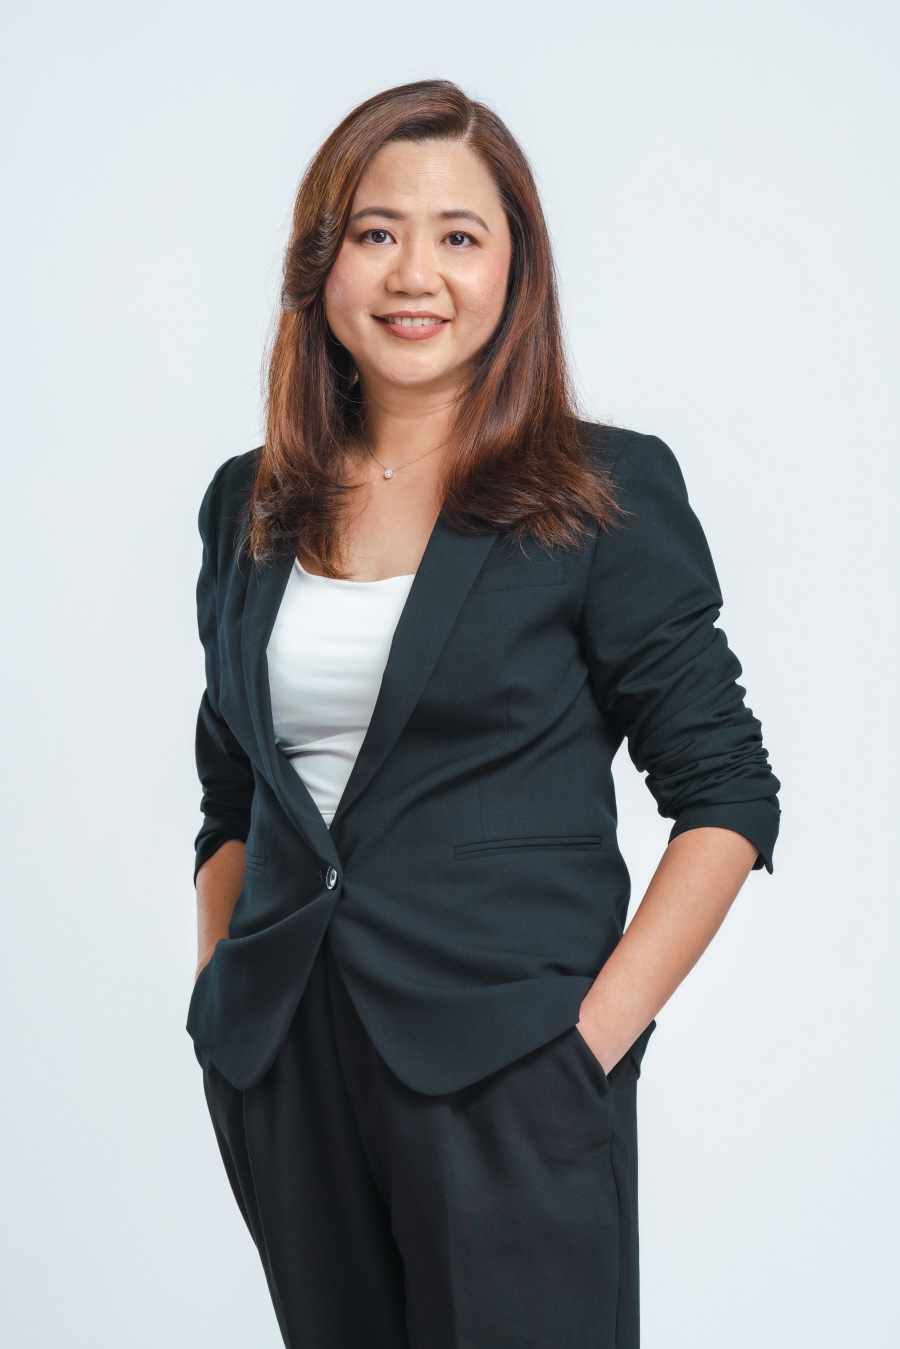 Sunway Medical Centet Penang’s CEO, Stephanie Lee Wai Fern